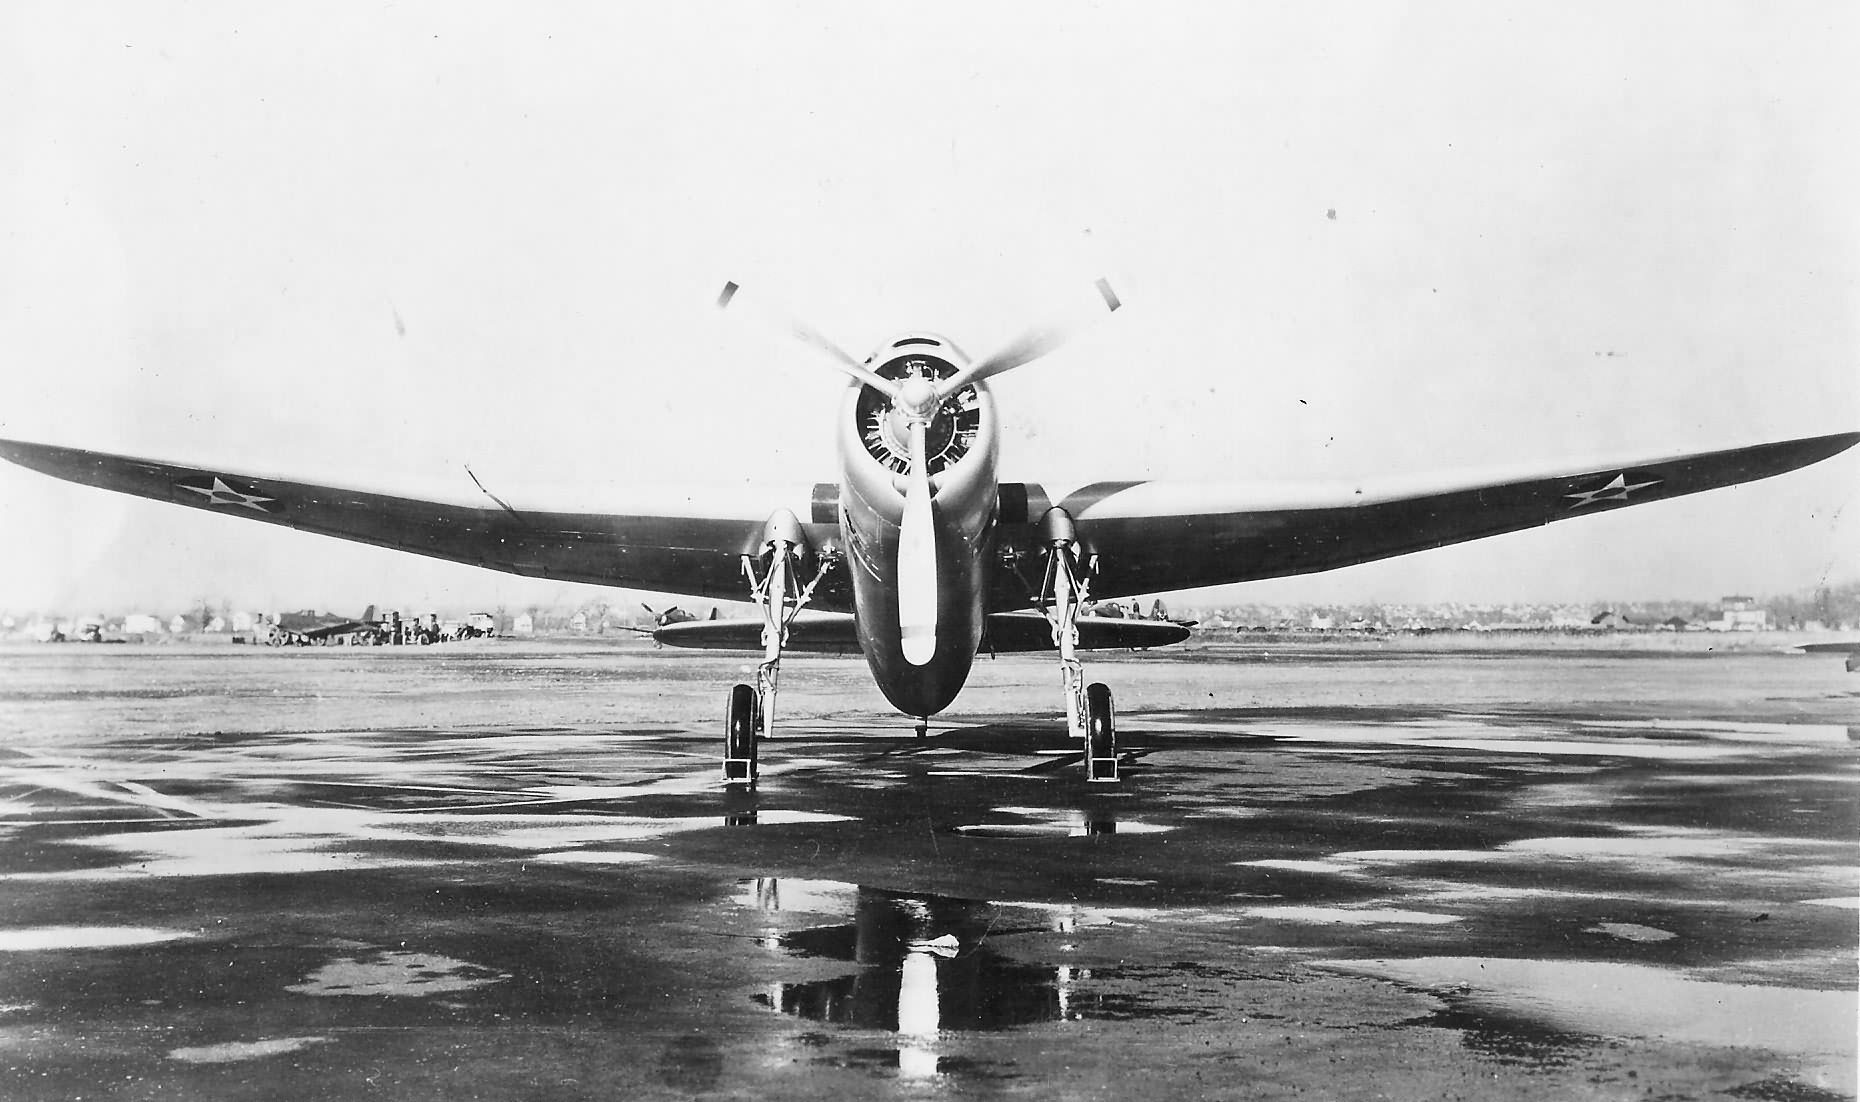 XTBU-1 front view | World War Photos